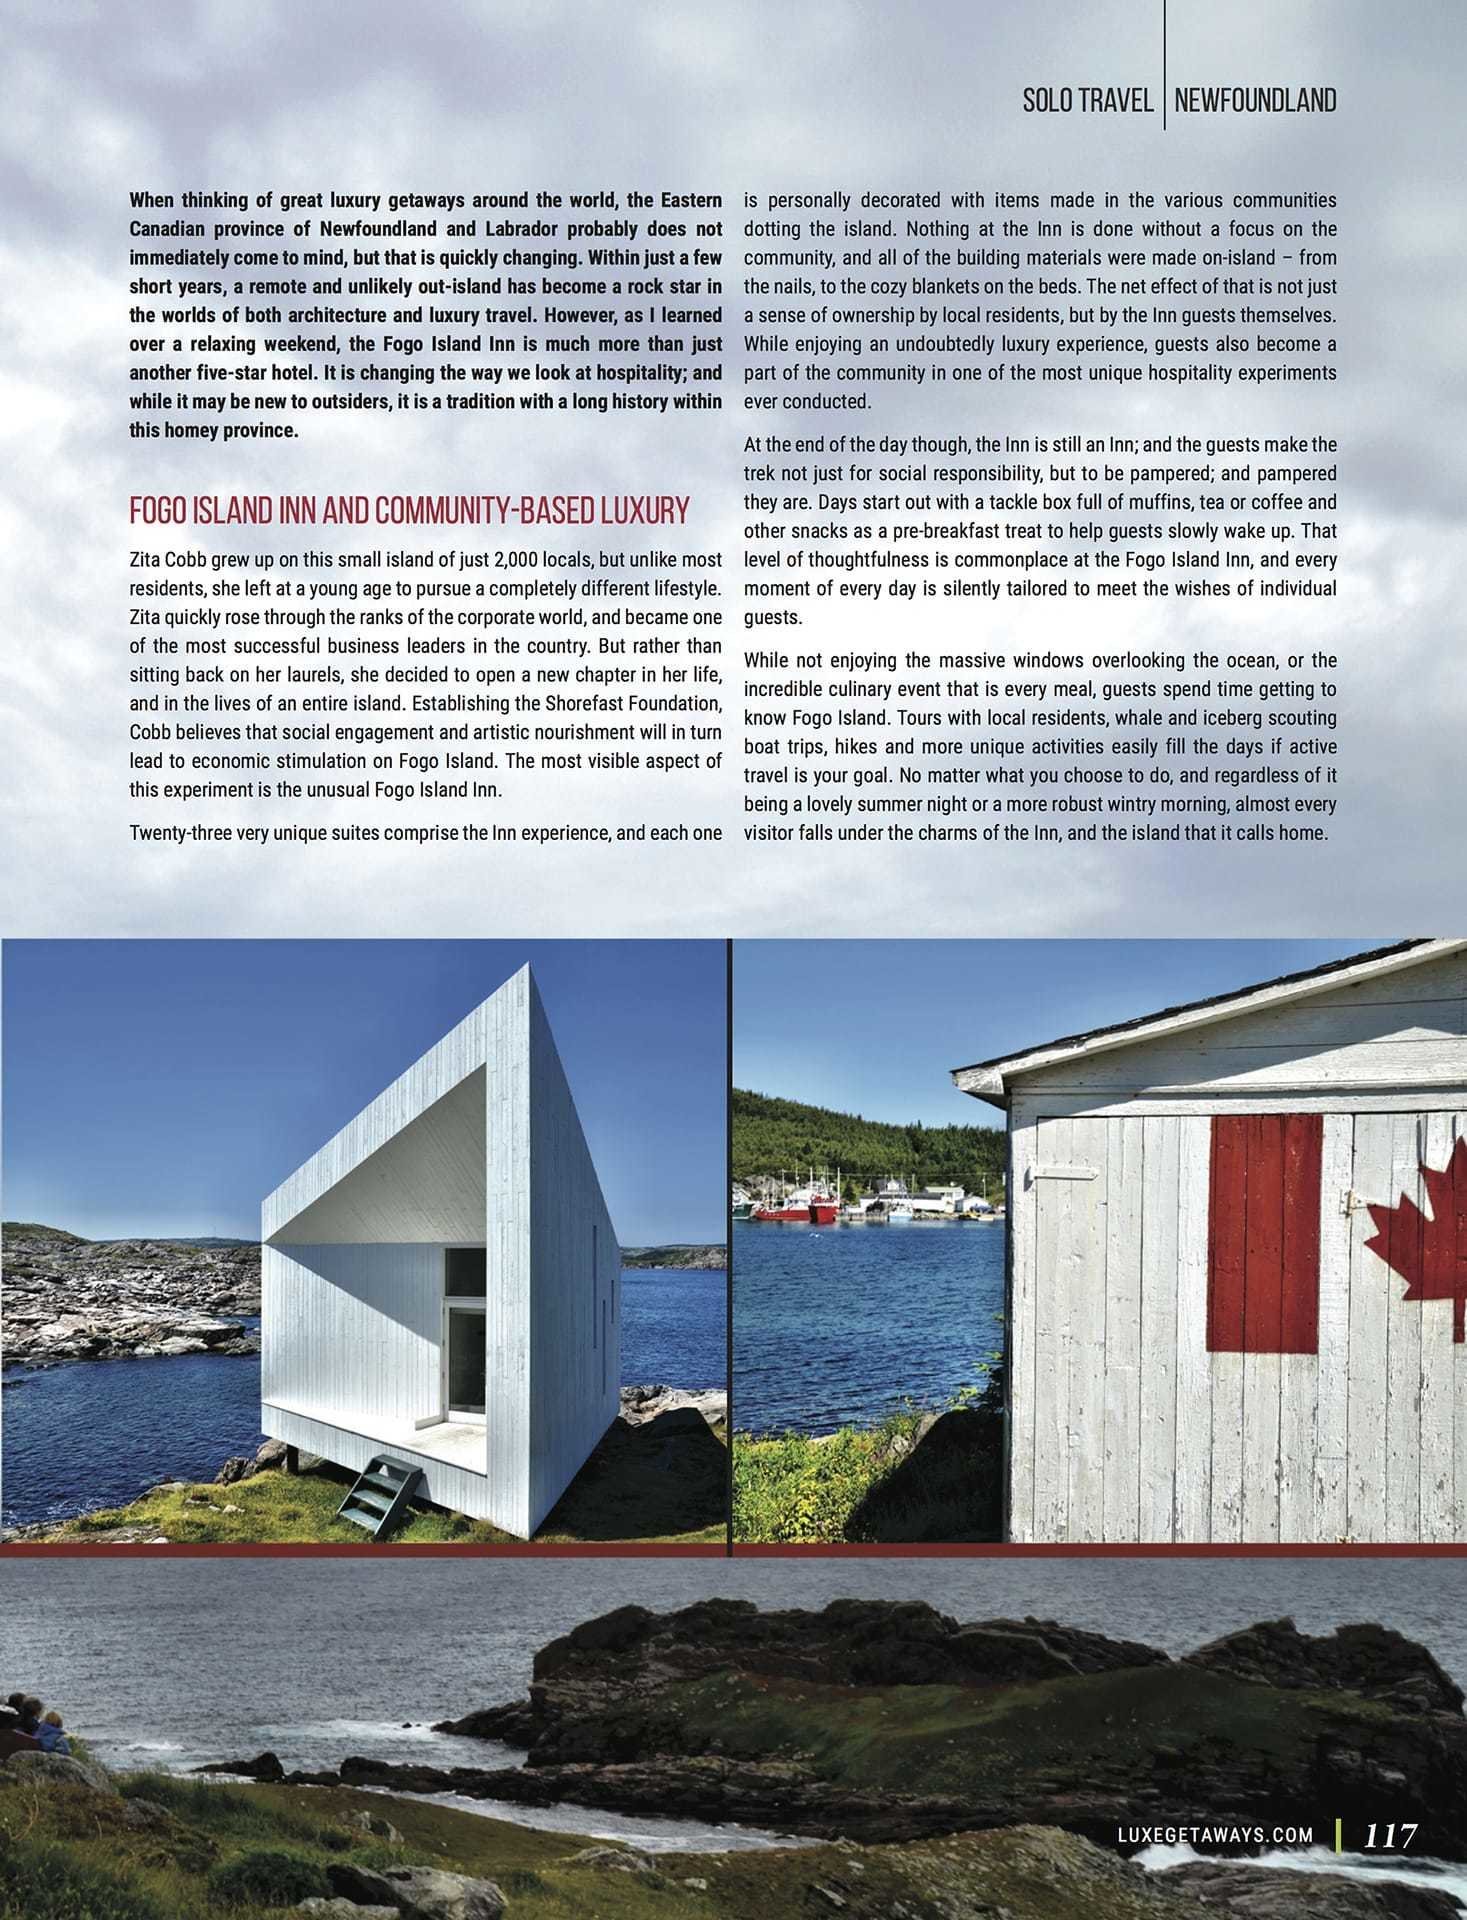 LuxeGetaways - Luxury Travel - Luxury Travel Magazine - Newfoundland - Matt Long - Canada